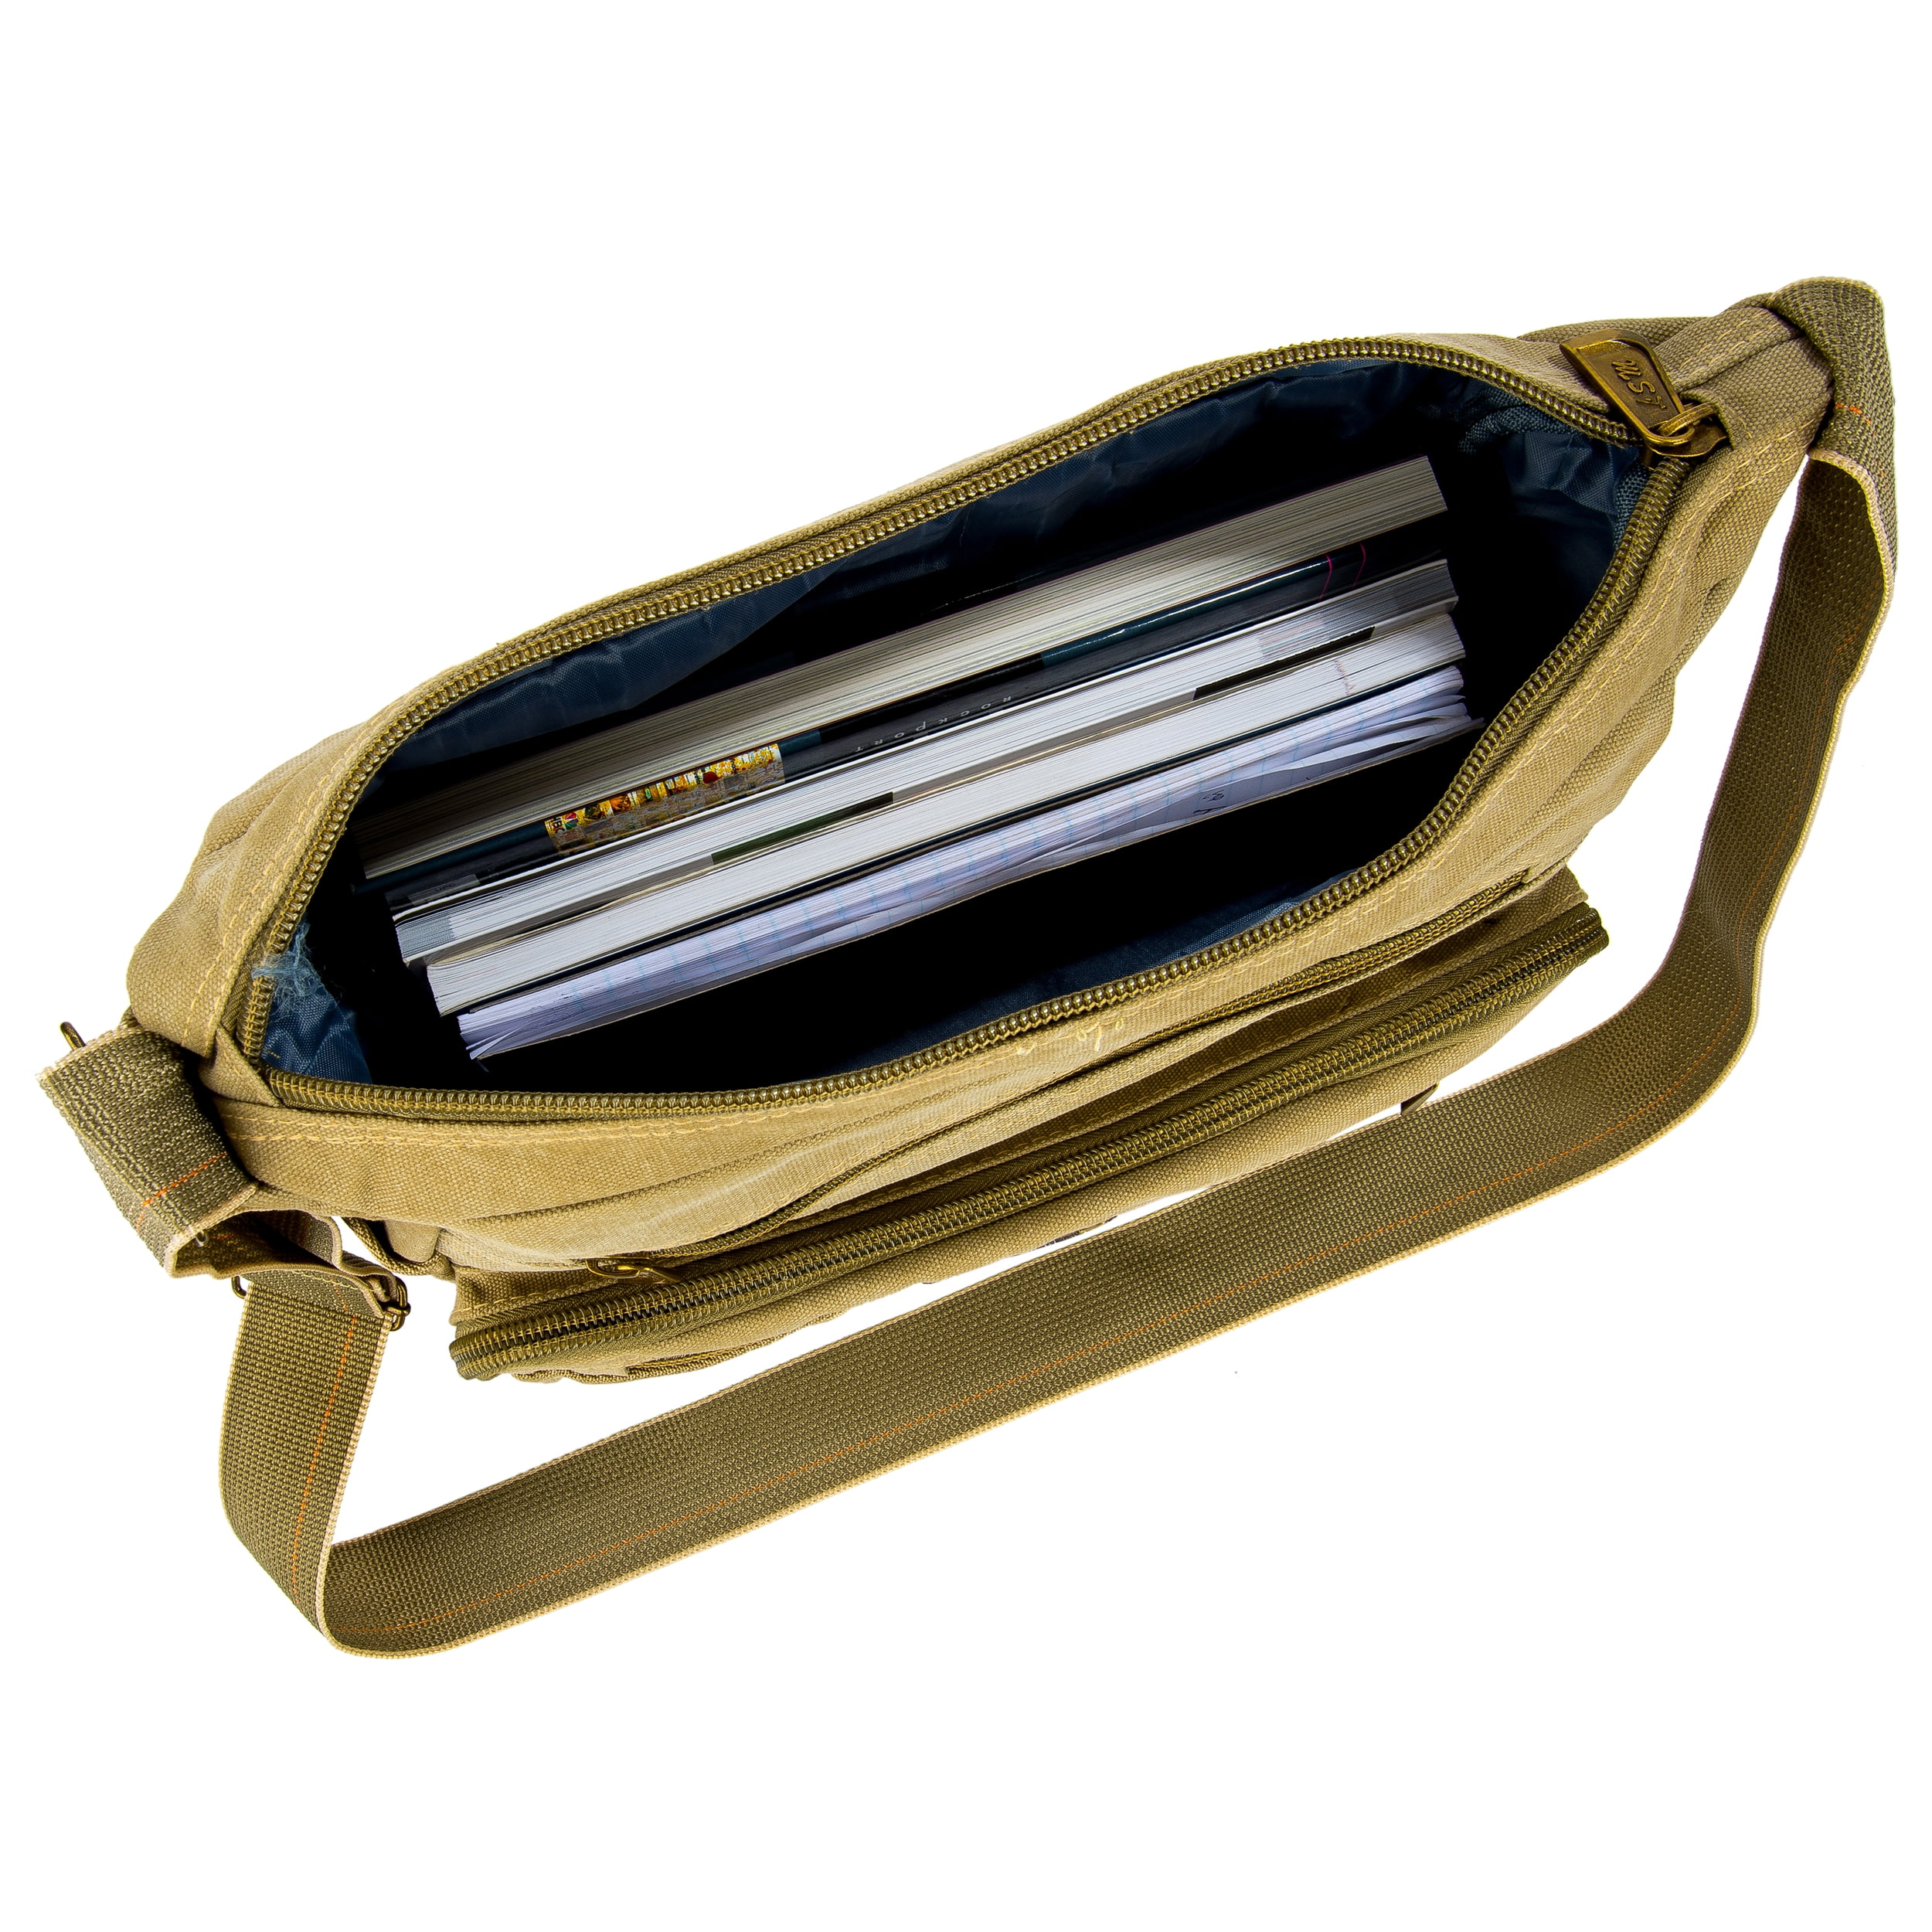 General All purpose Principe Canvas Messenger Bag fits 13, 13.3, 14 inch  bags [Unisex Design]